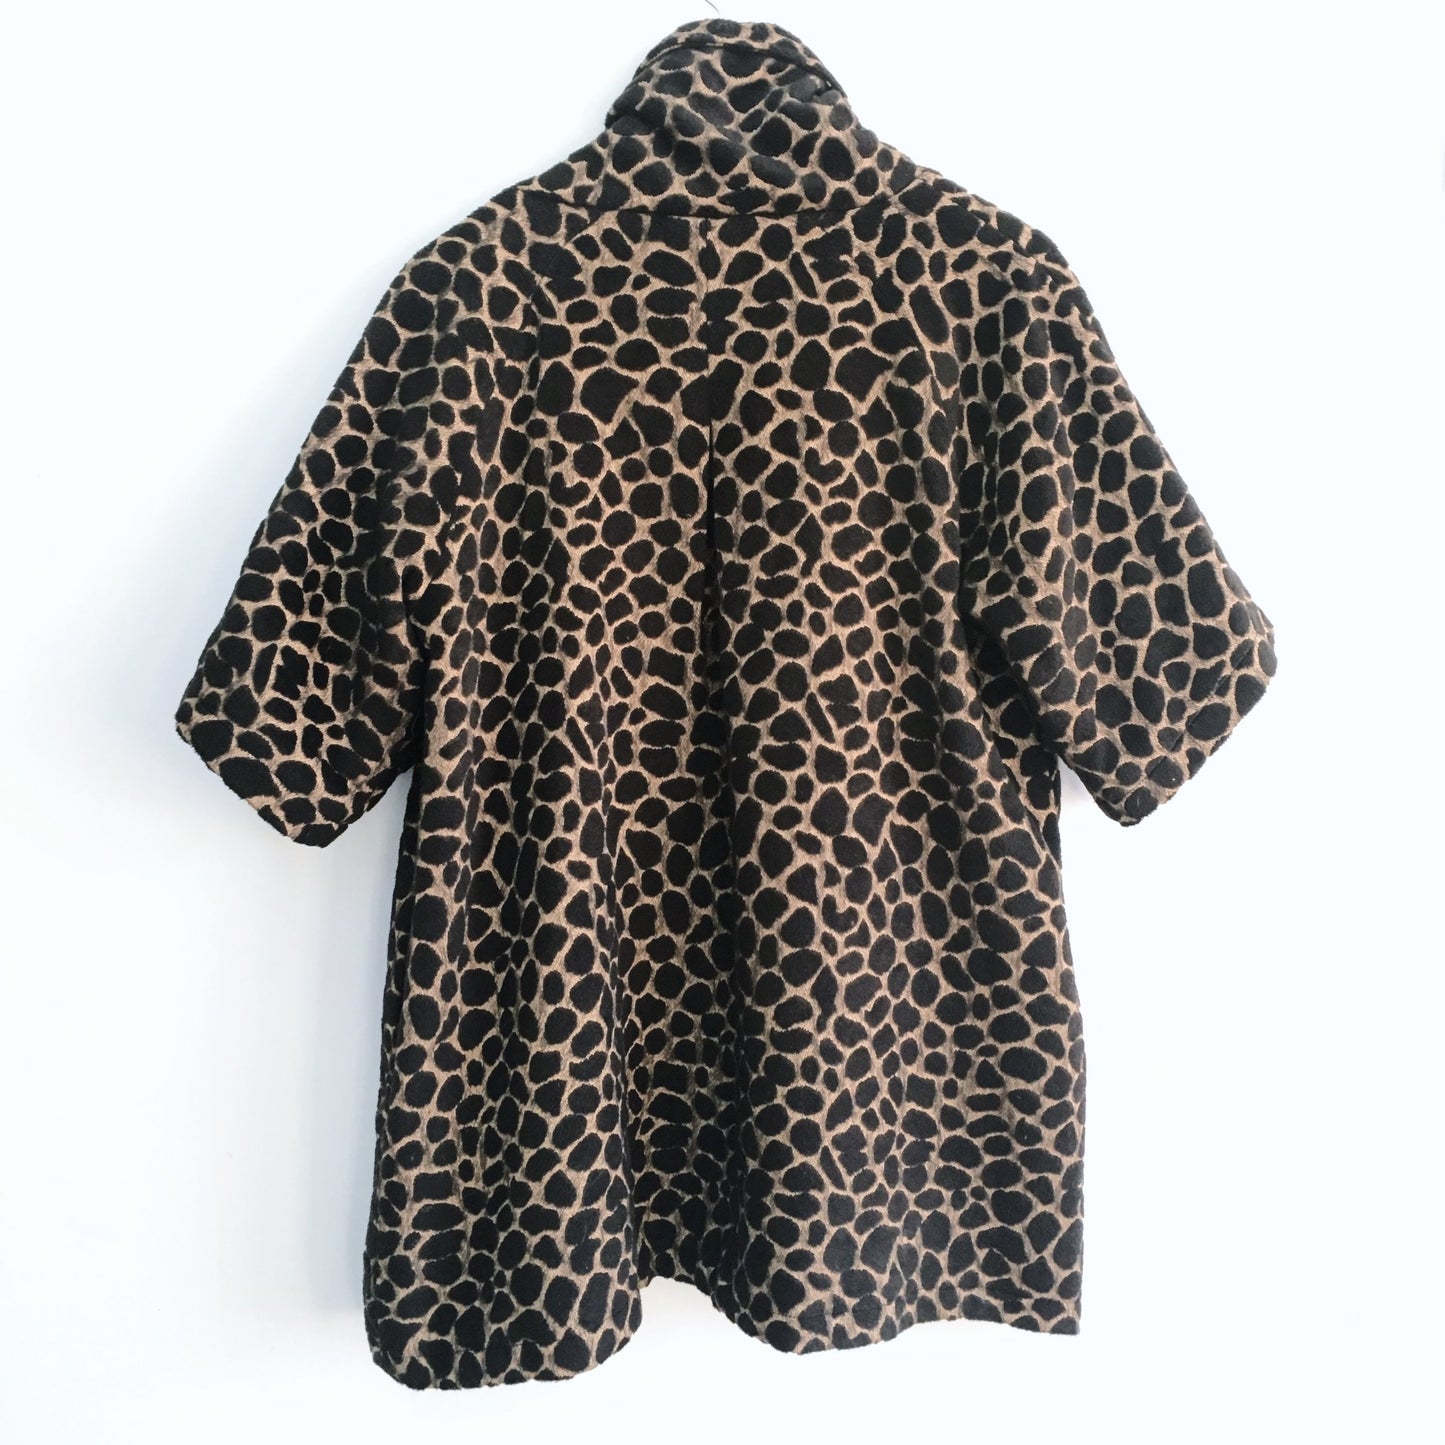 Luii Leopard Jacket - Size Medium